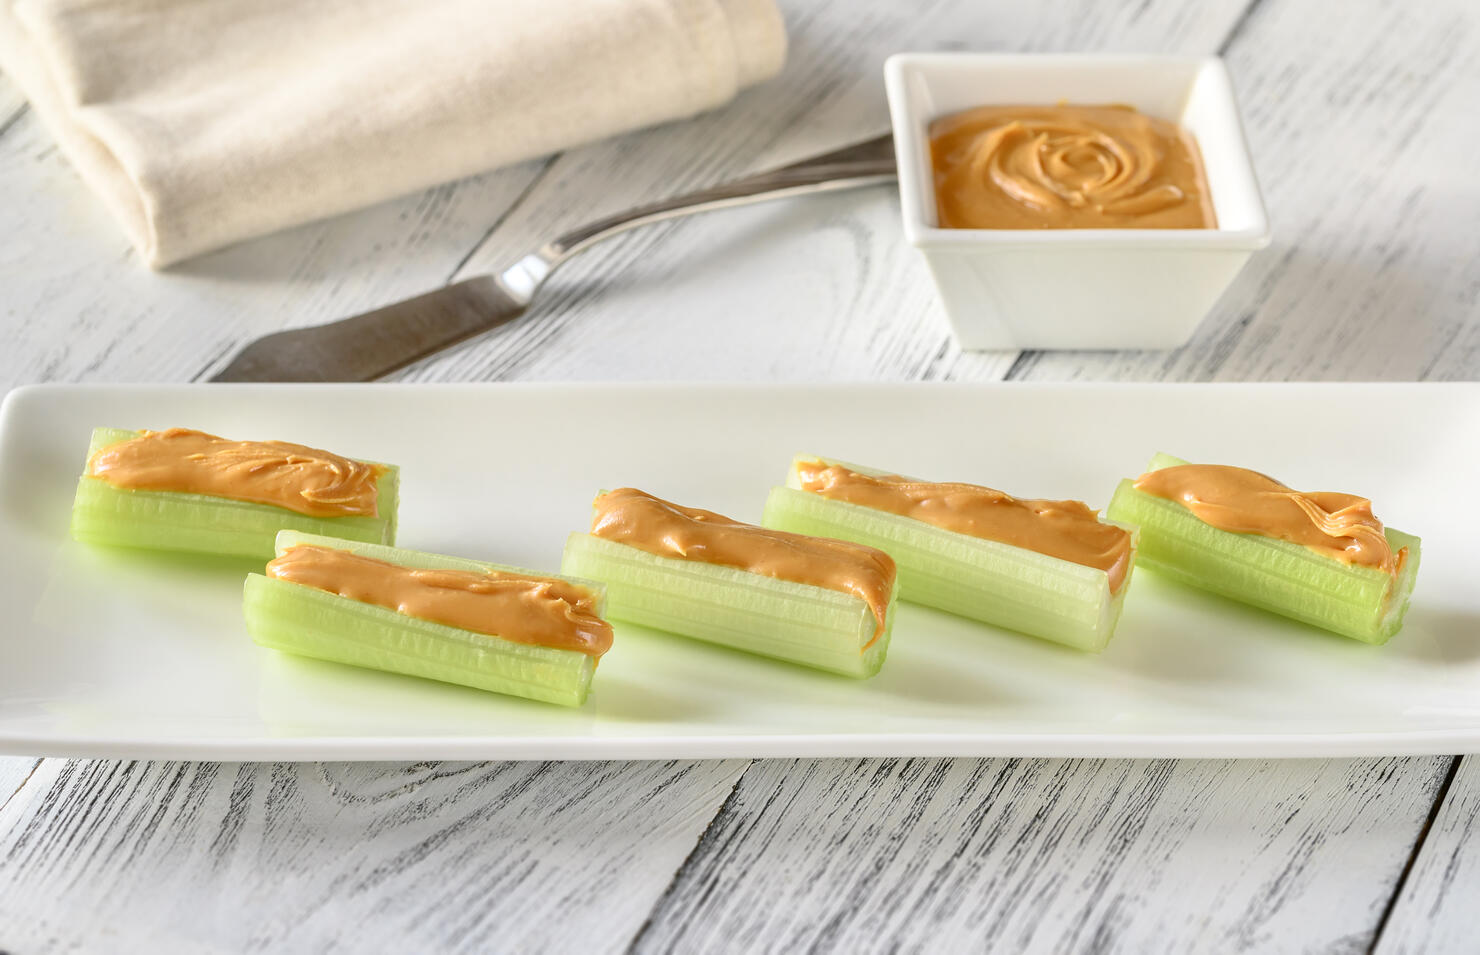 Celery stalks with peanut butter